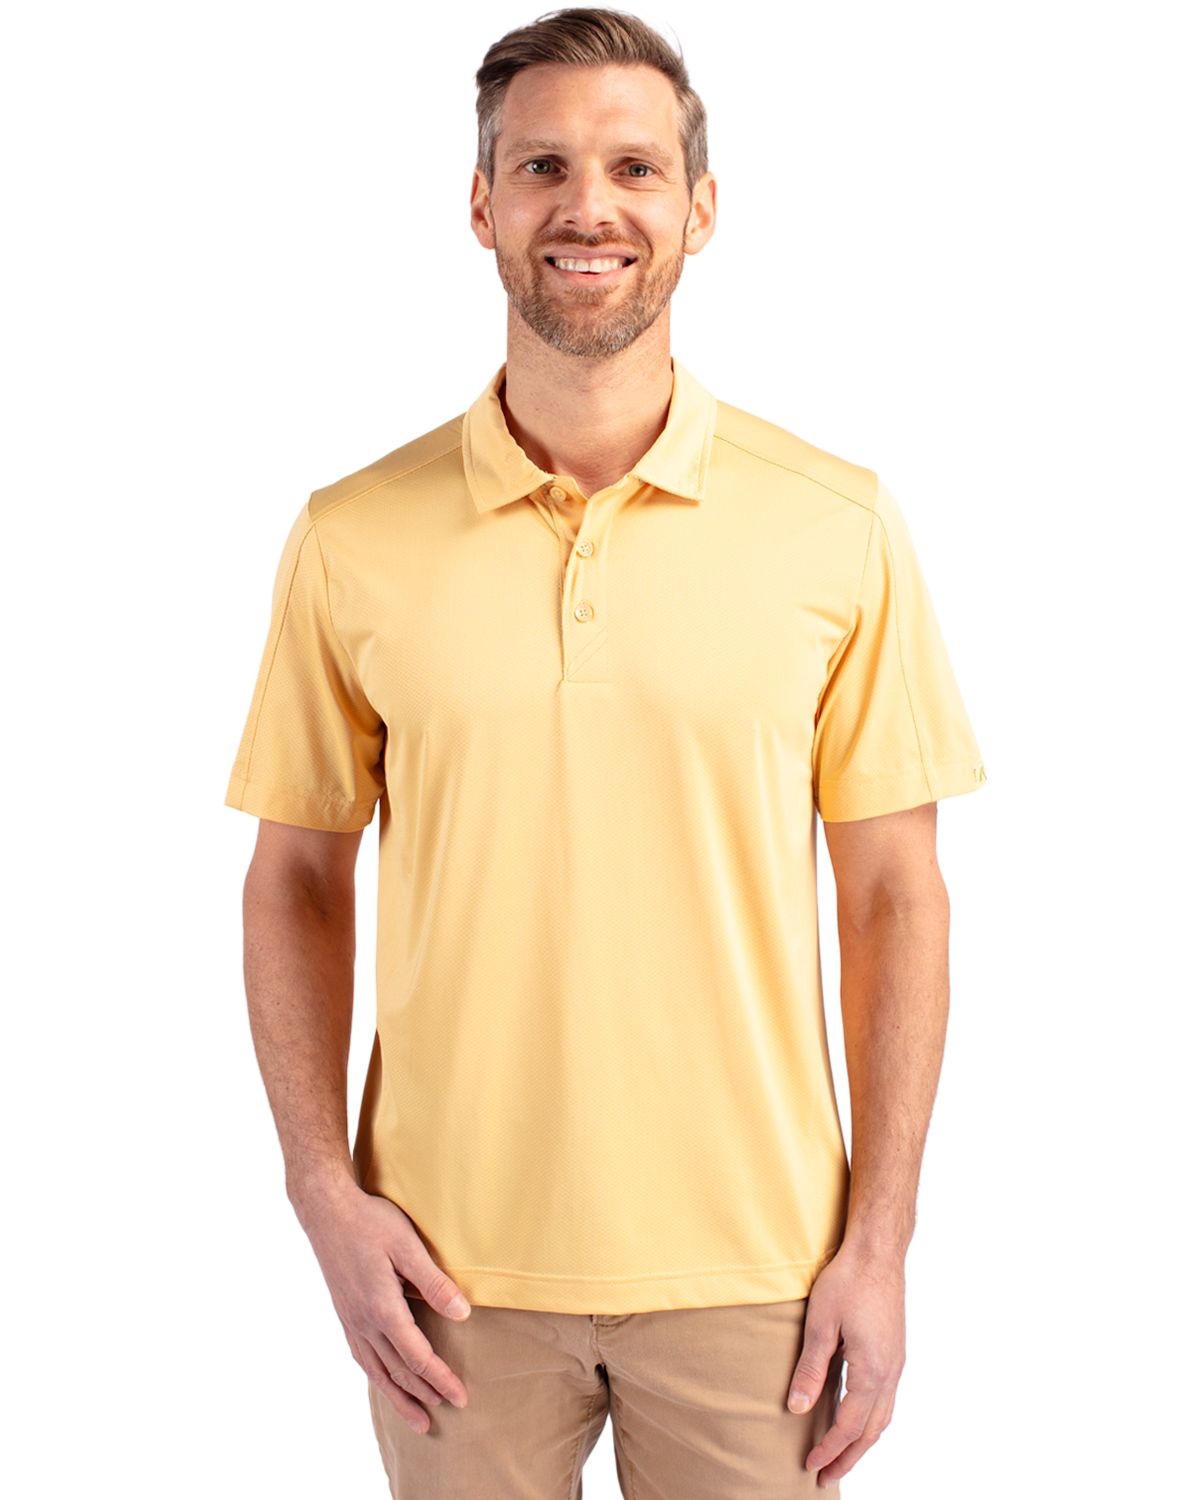 Prospect Textured Stretch Mens Short Sleeve Polo Shirt - Desert